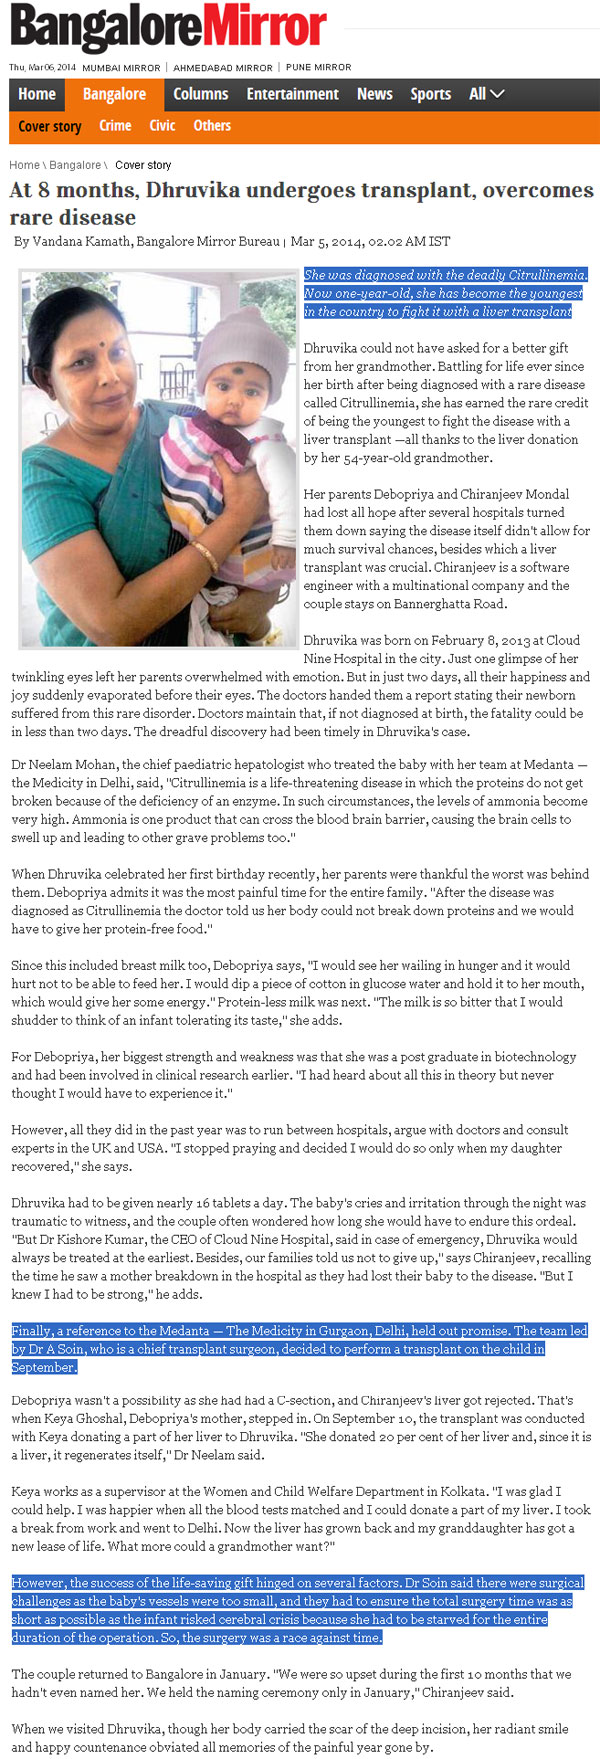 At 8 months, Dhruvika undergoes transplant, overcomes rare disease